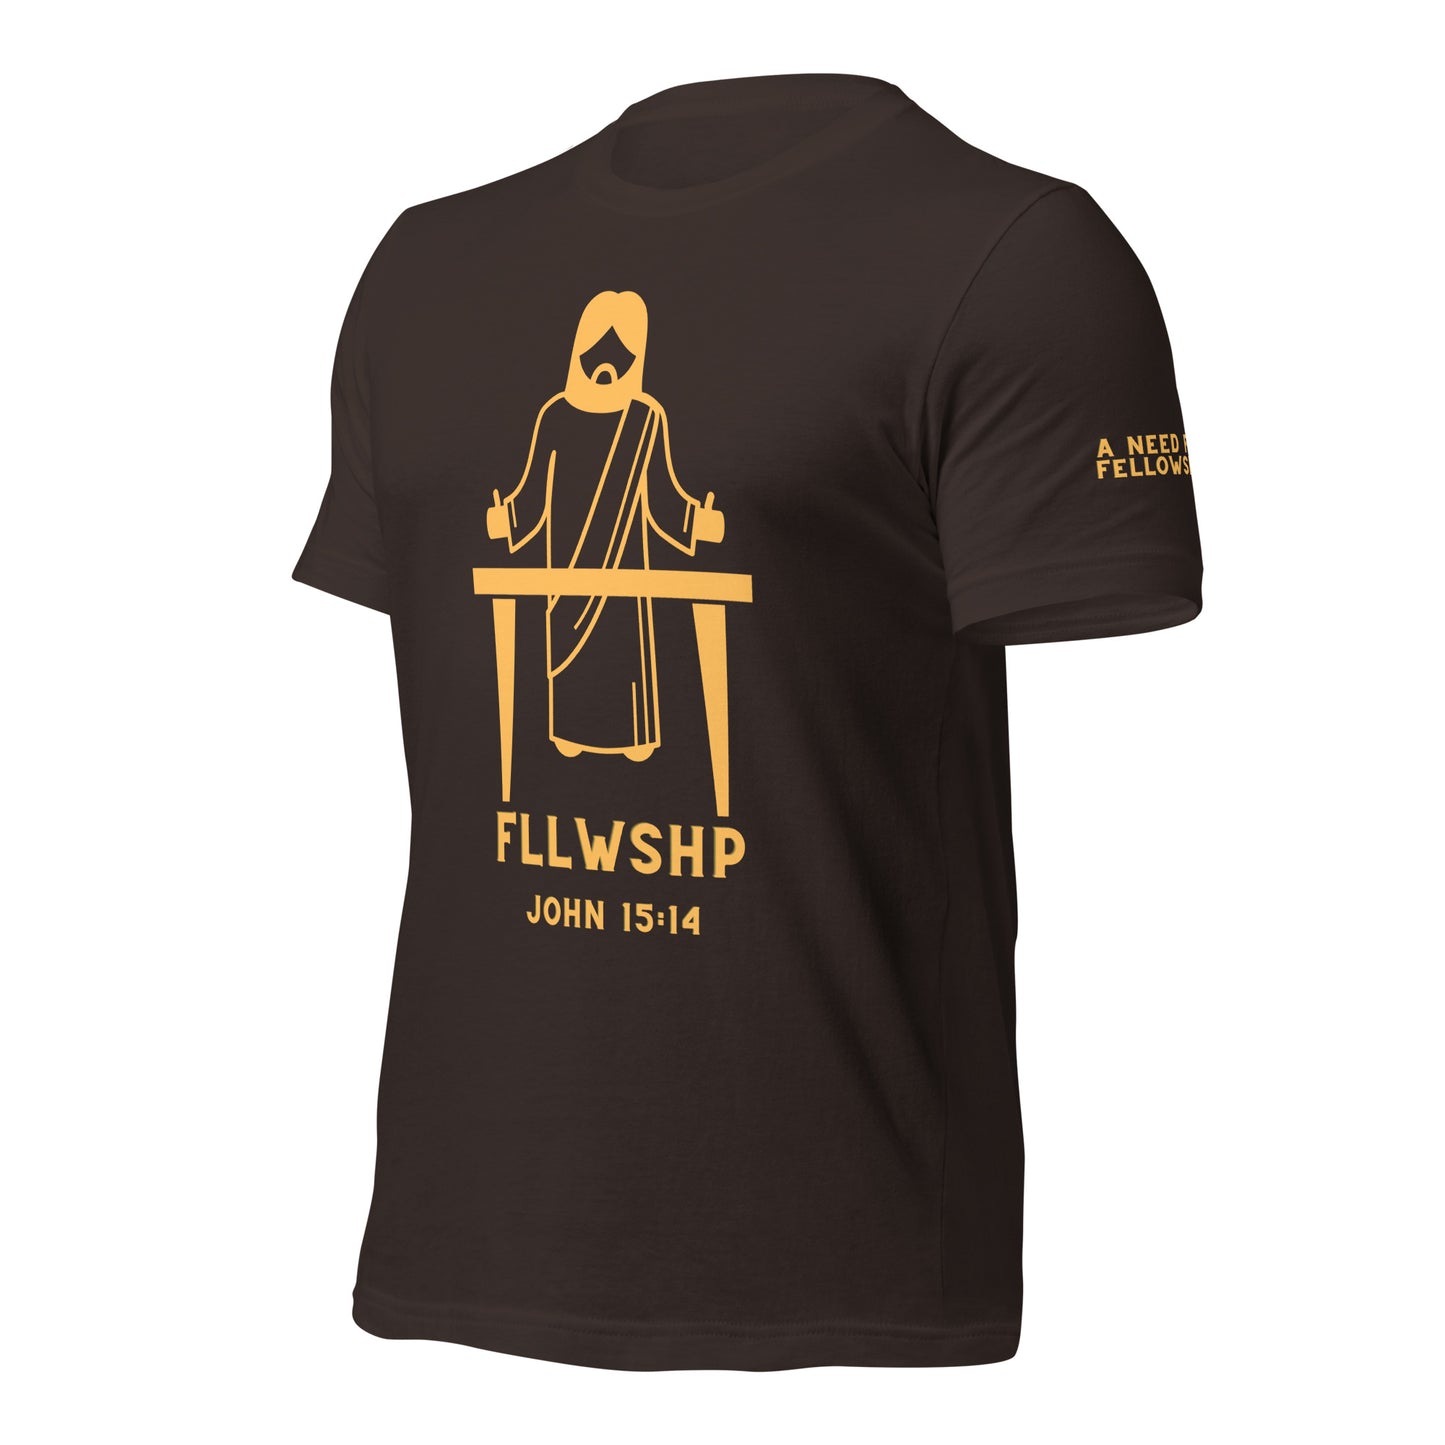 FLLWSHP w/Jesus T-shirt